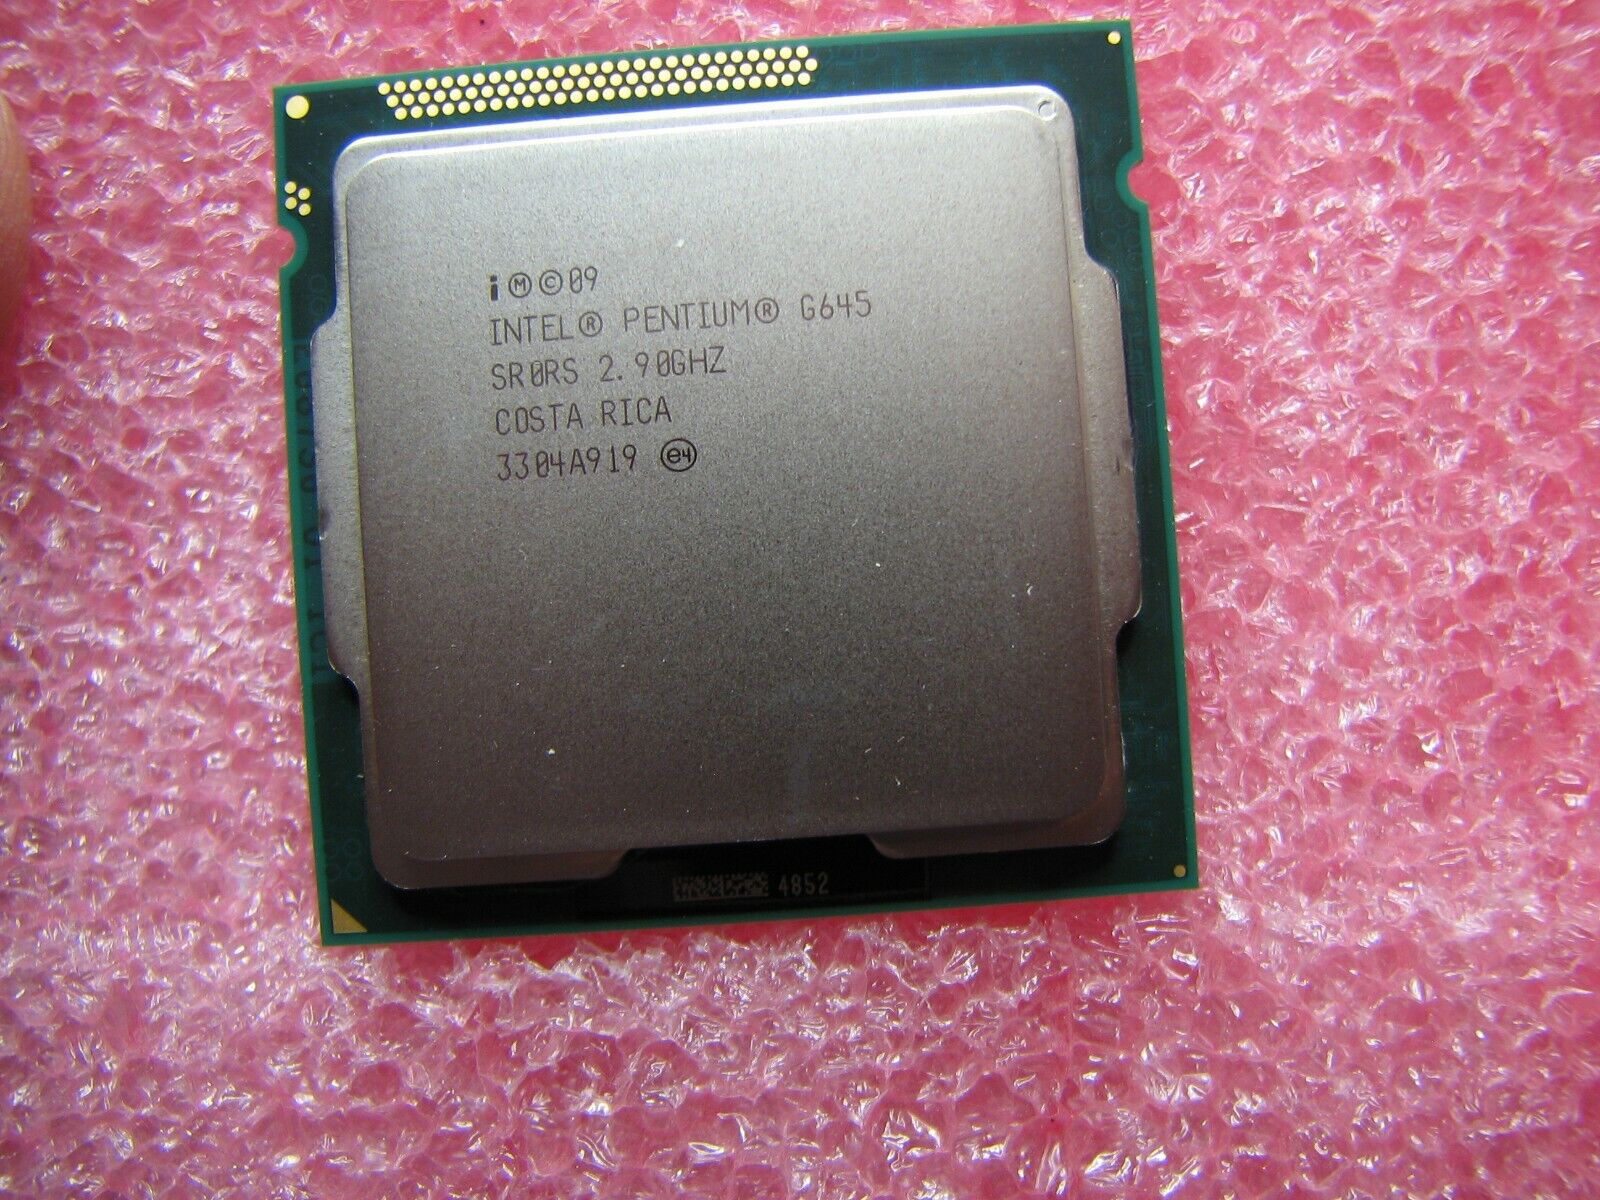 Intel Pentium G645 2.9ghz 3mb sr0rs bx80623g645 LGA1155 dual core USA Seller